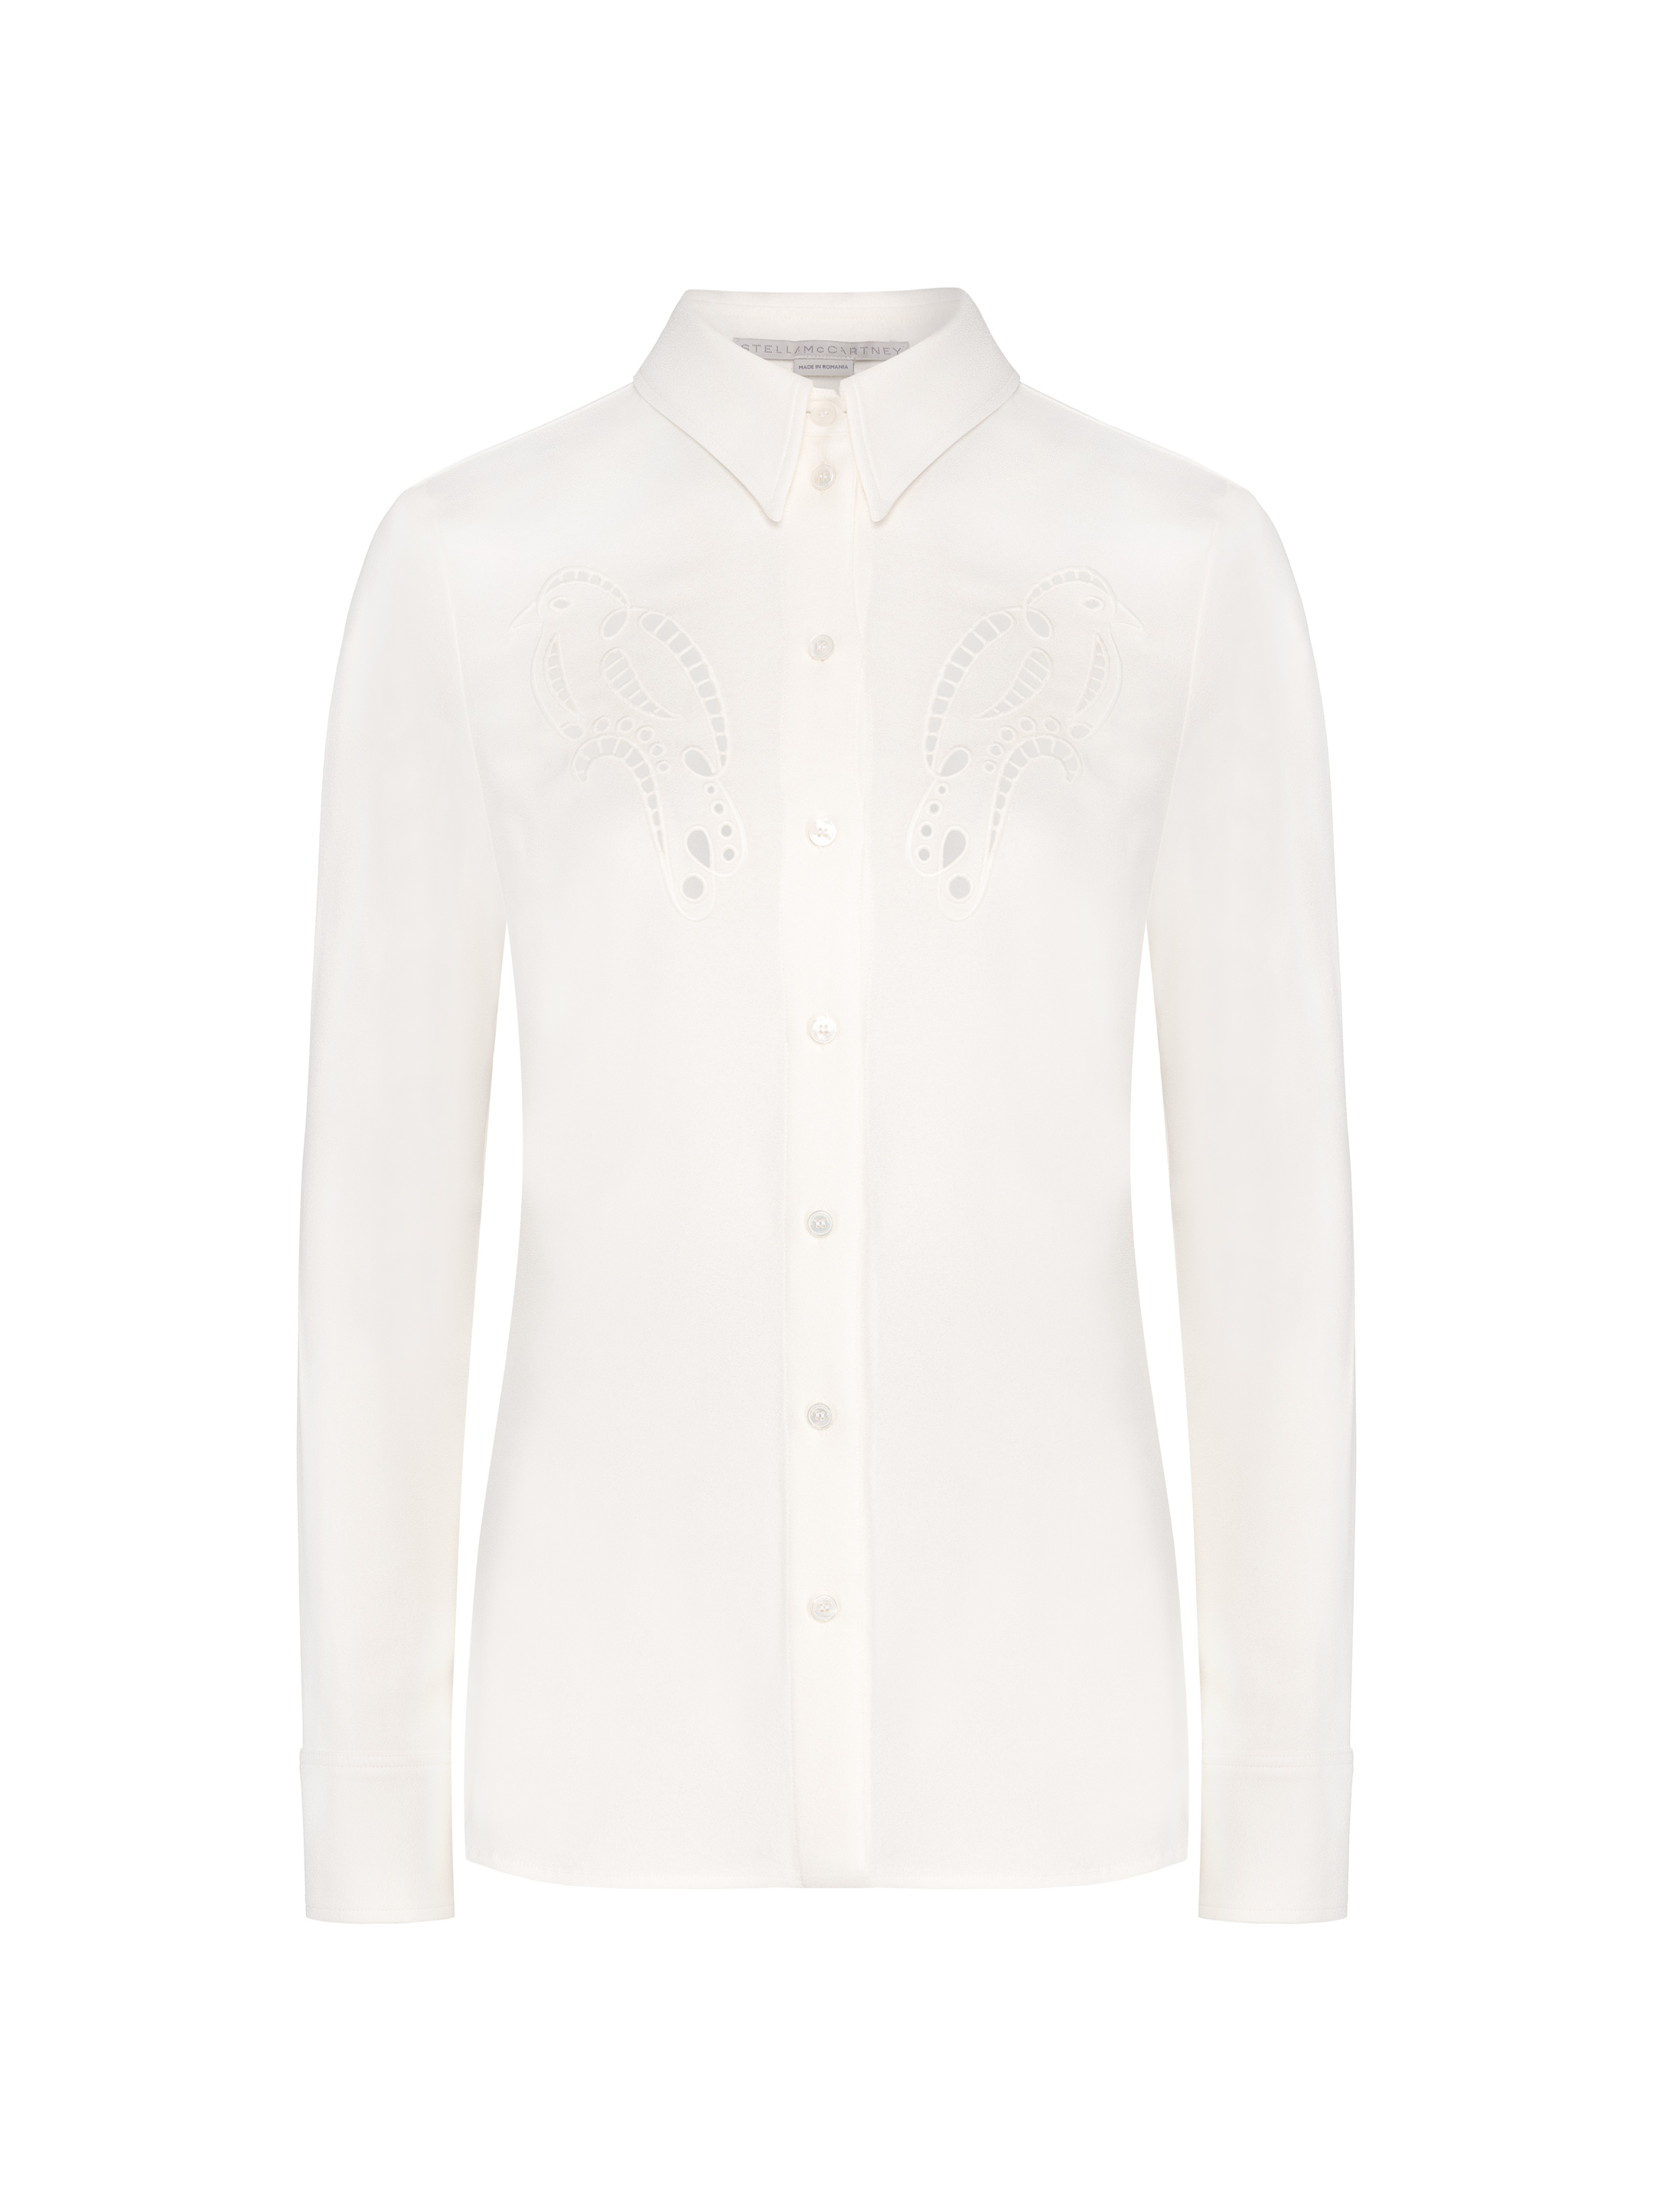 Stella McCartney women's Patterned shirt - buy for 597400 KZT in ...